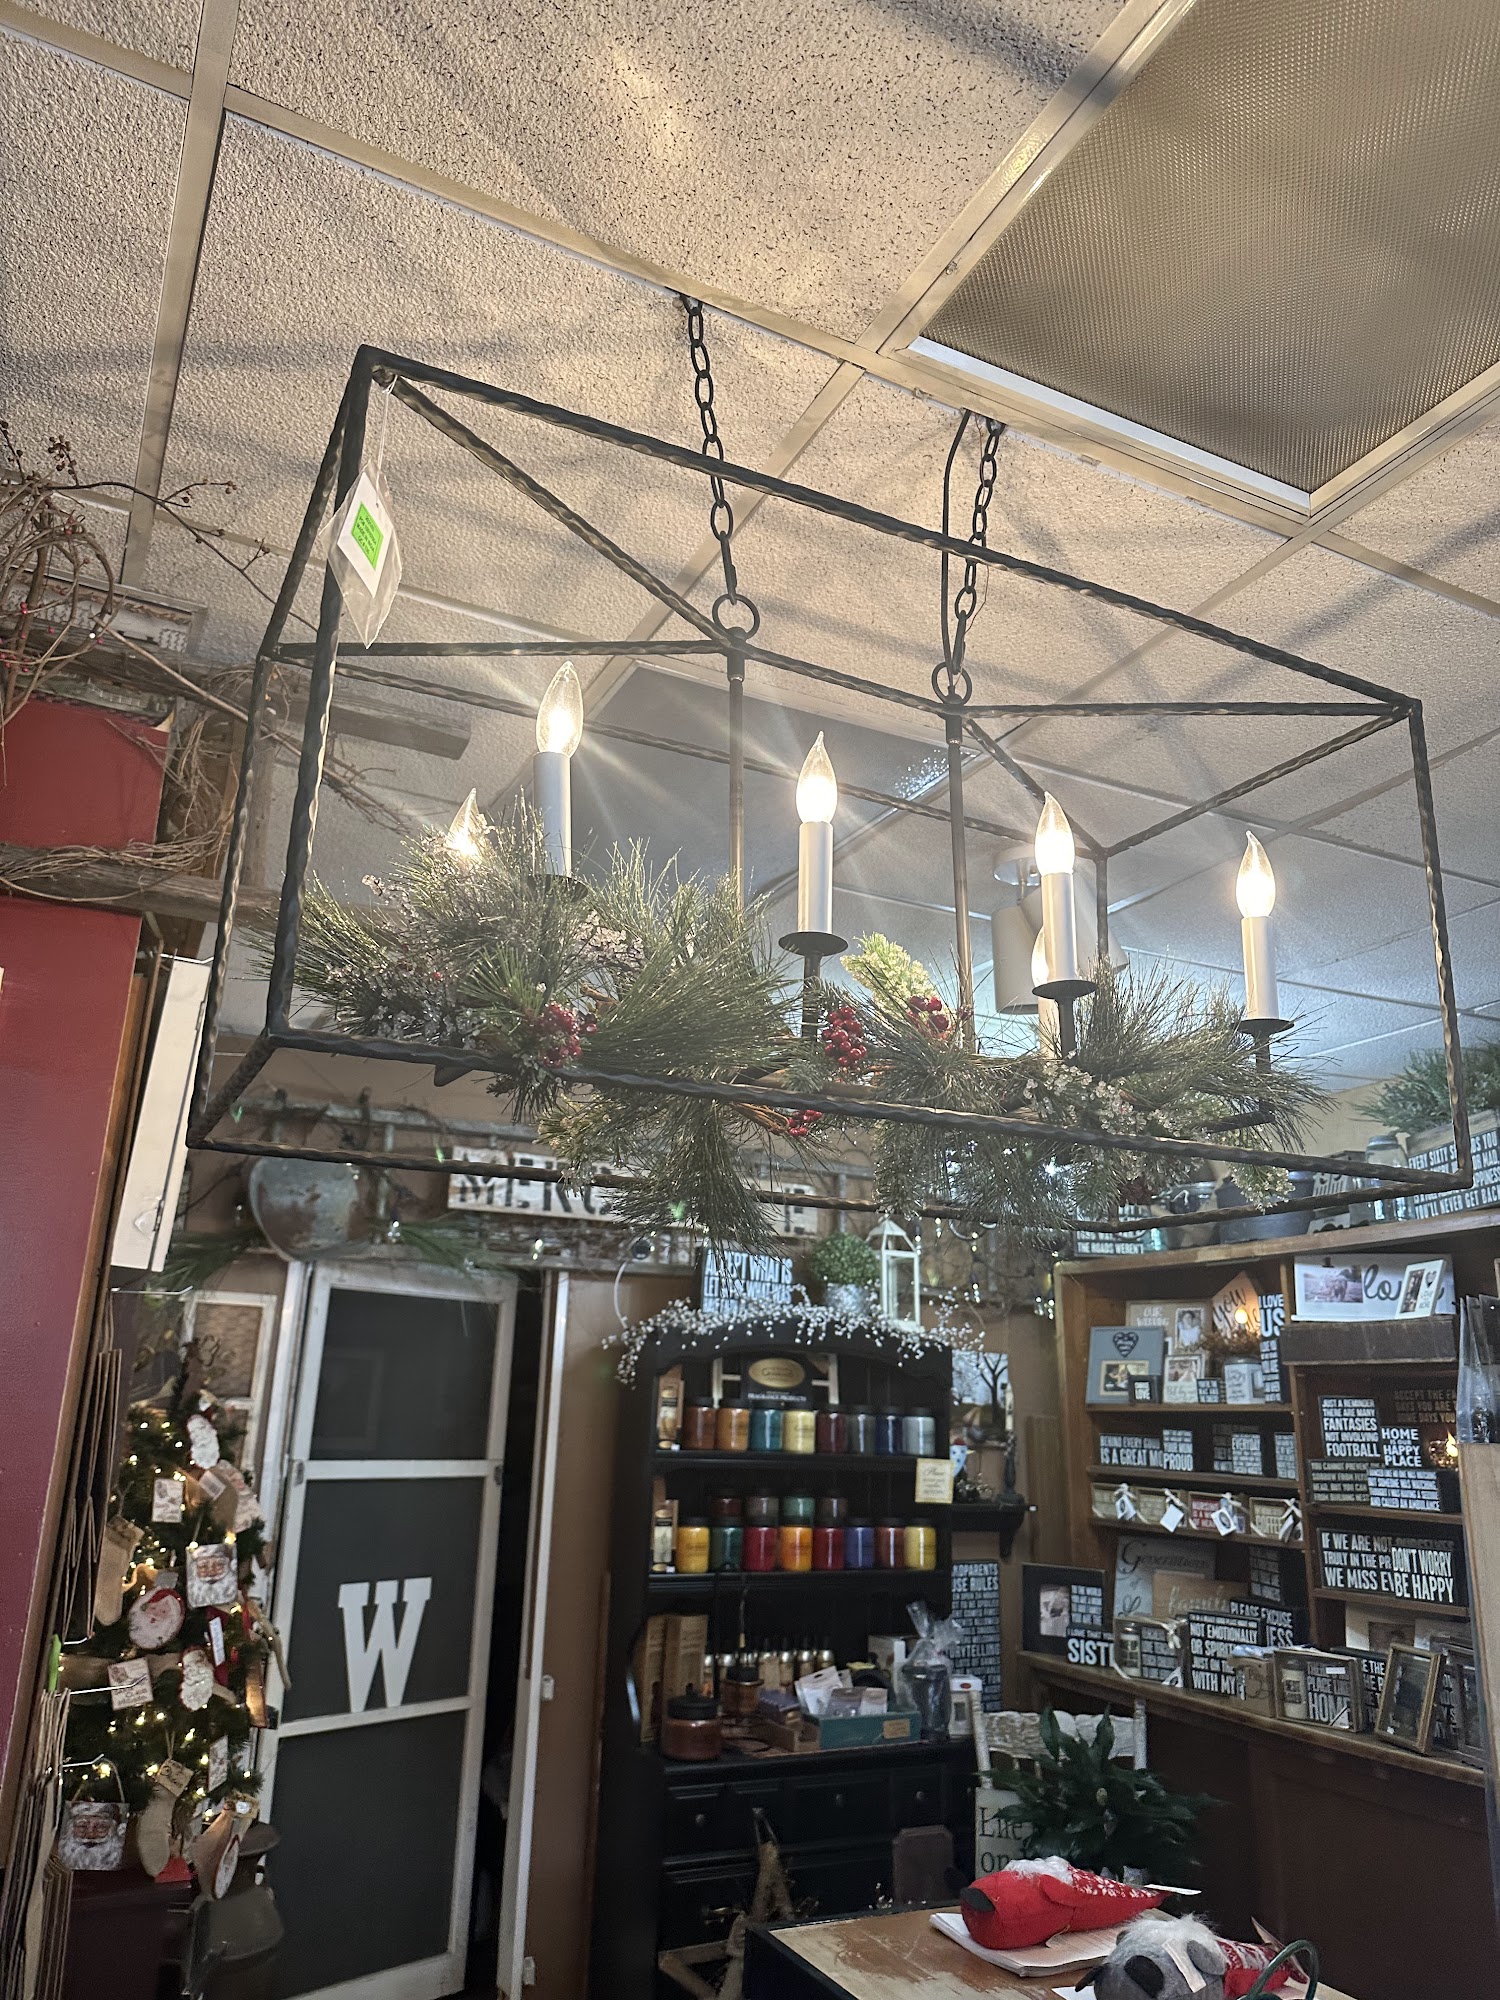 Willie's Primitive Attic and Flower Shop